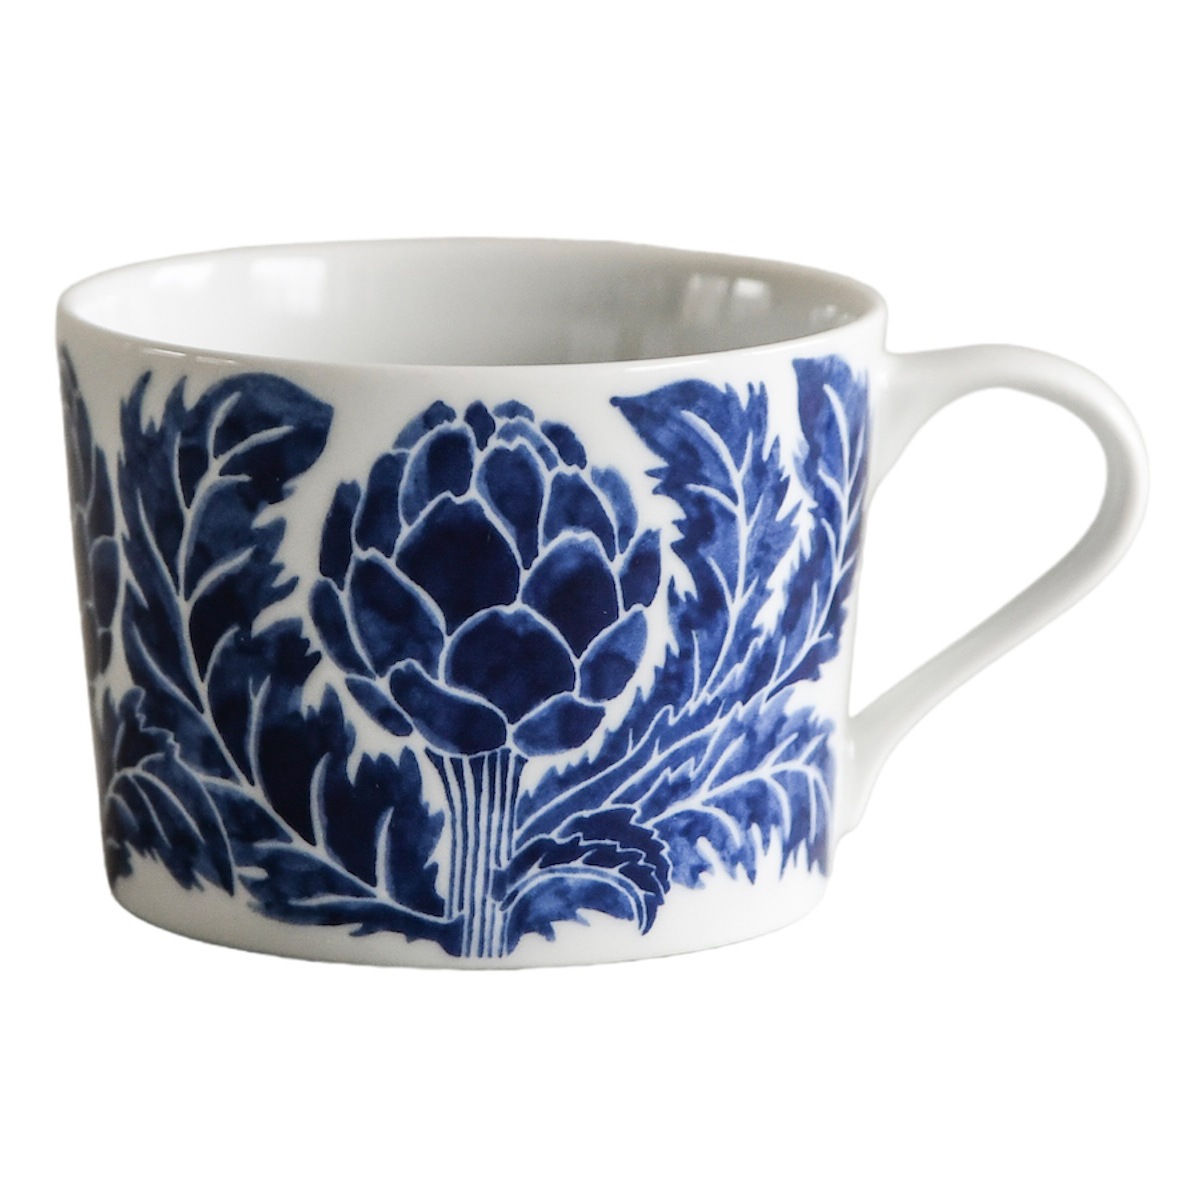 Botanica Artichoke Mug 24 cl, Blue